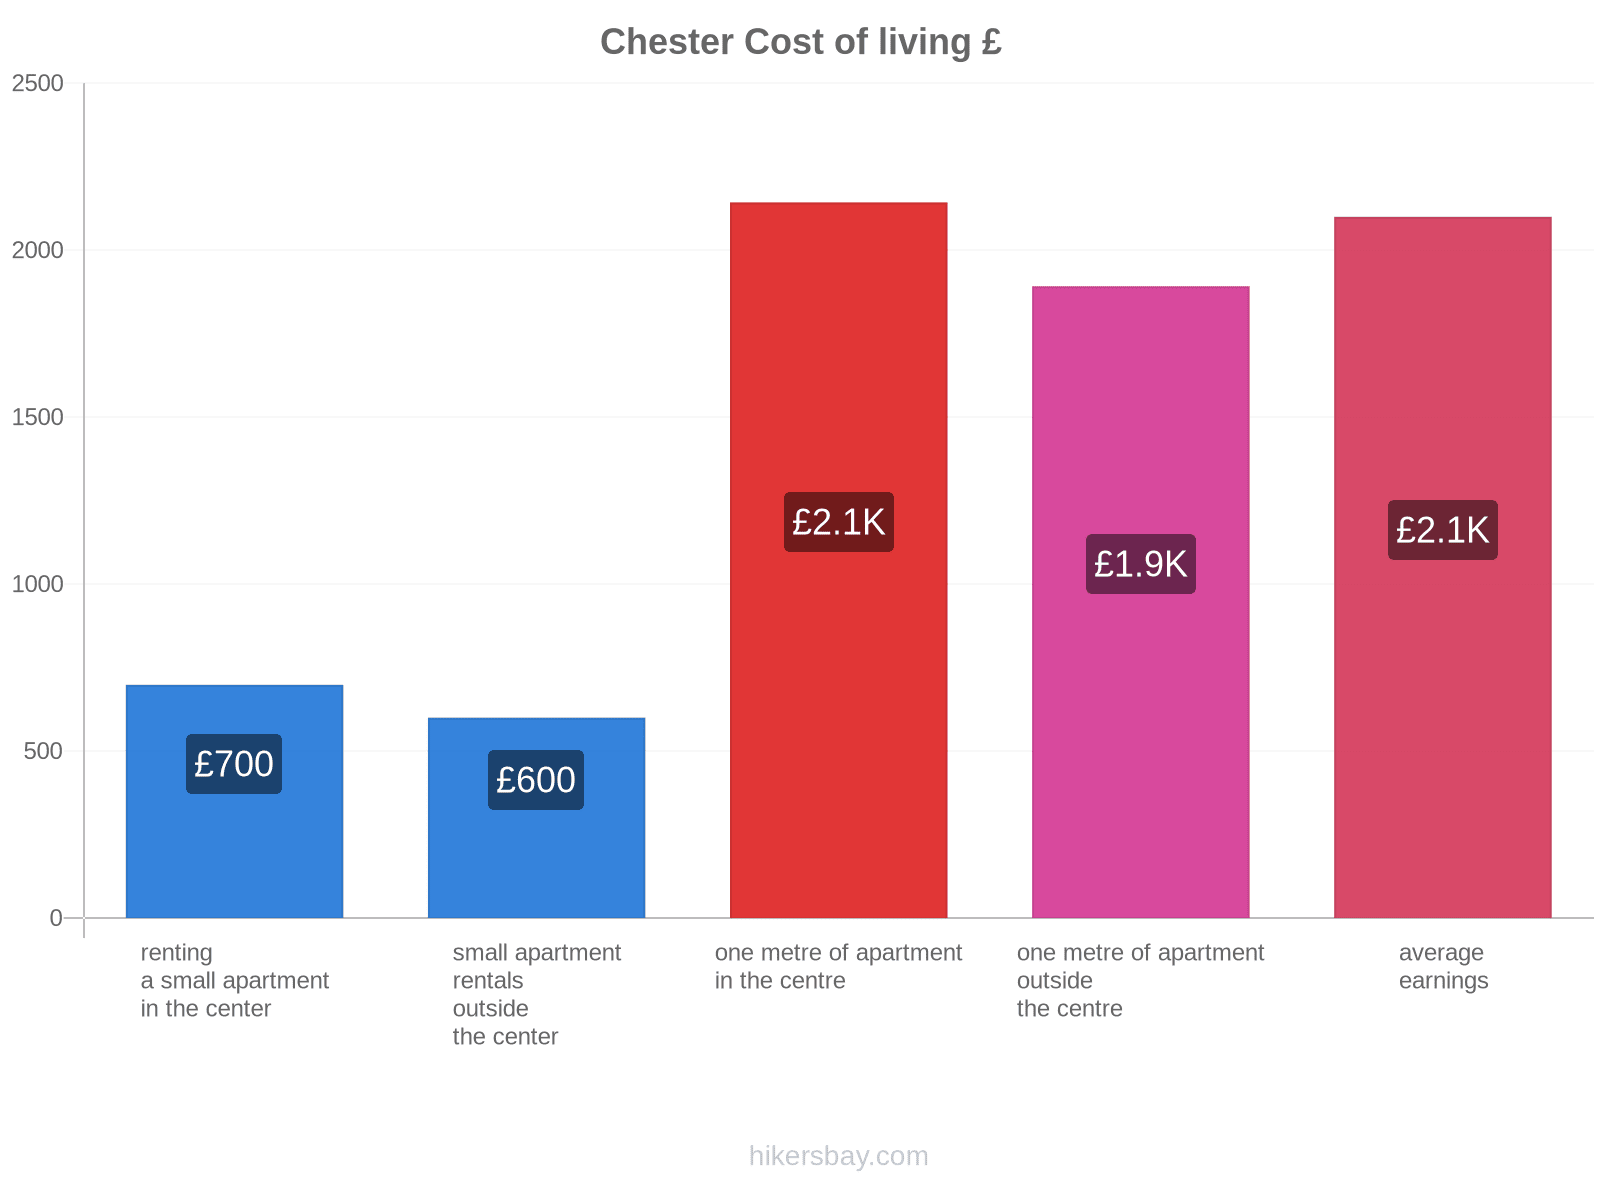 Chester cost of living hikersbay.com